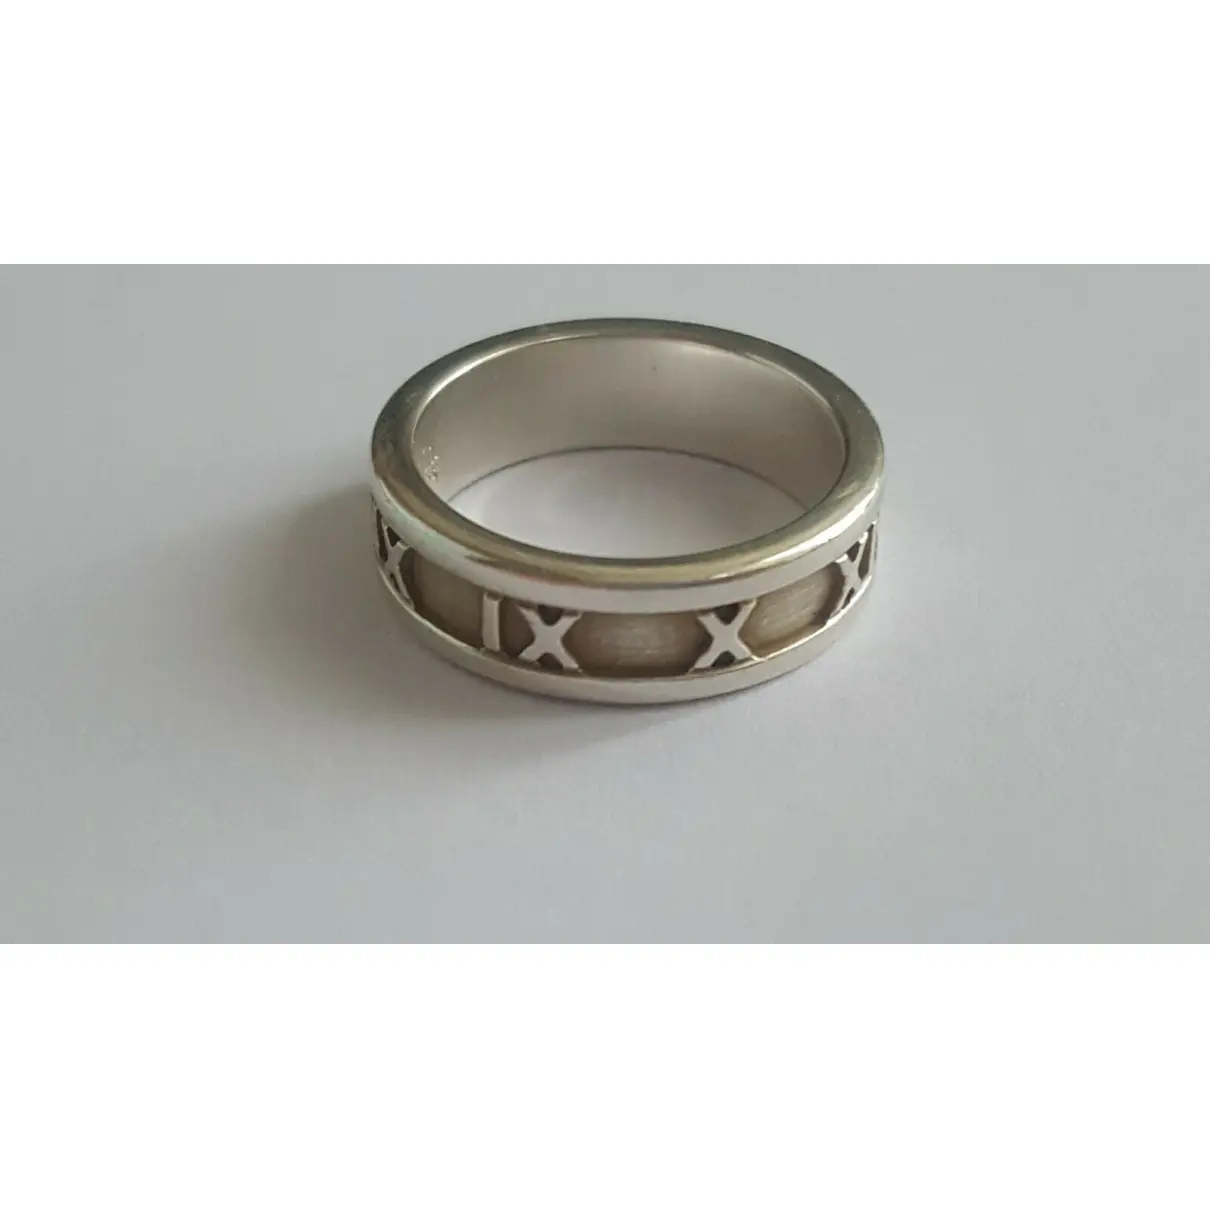 Atlas silver ring Tiffany & Co